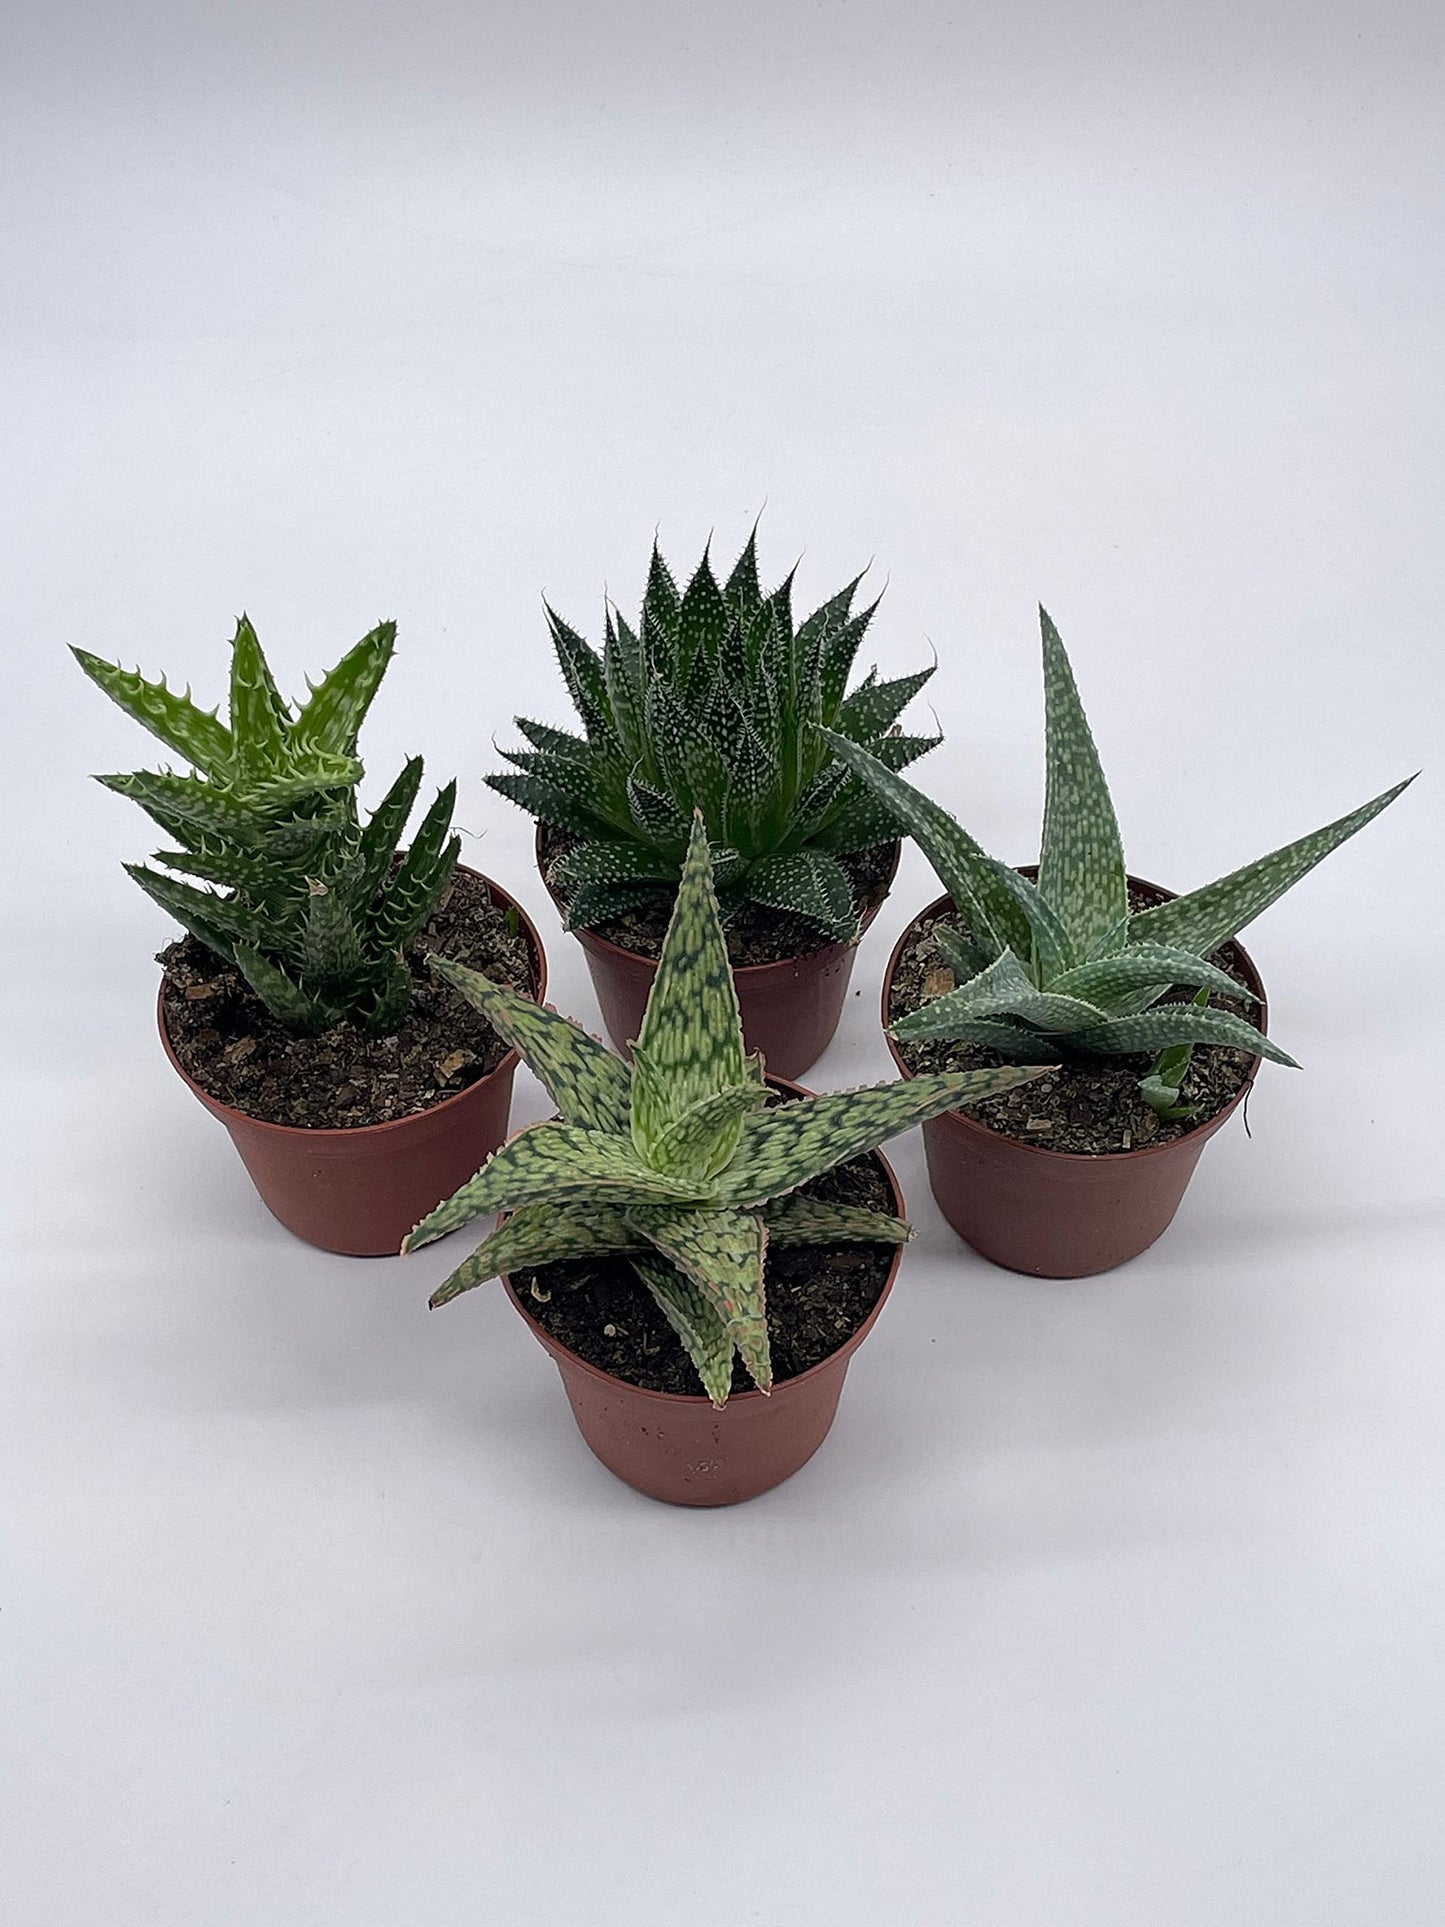 Aloe Variety Assortment, 3 inch pots, 4 Different Aloe Succulents